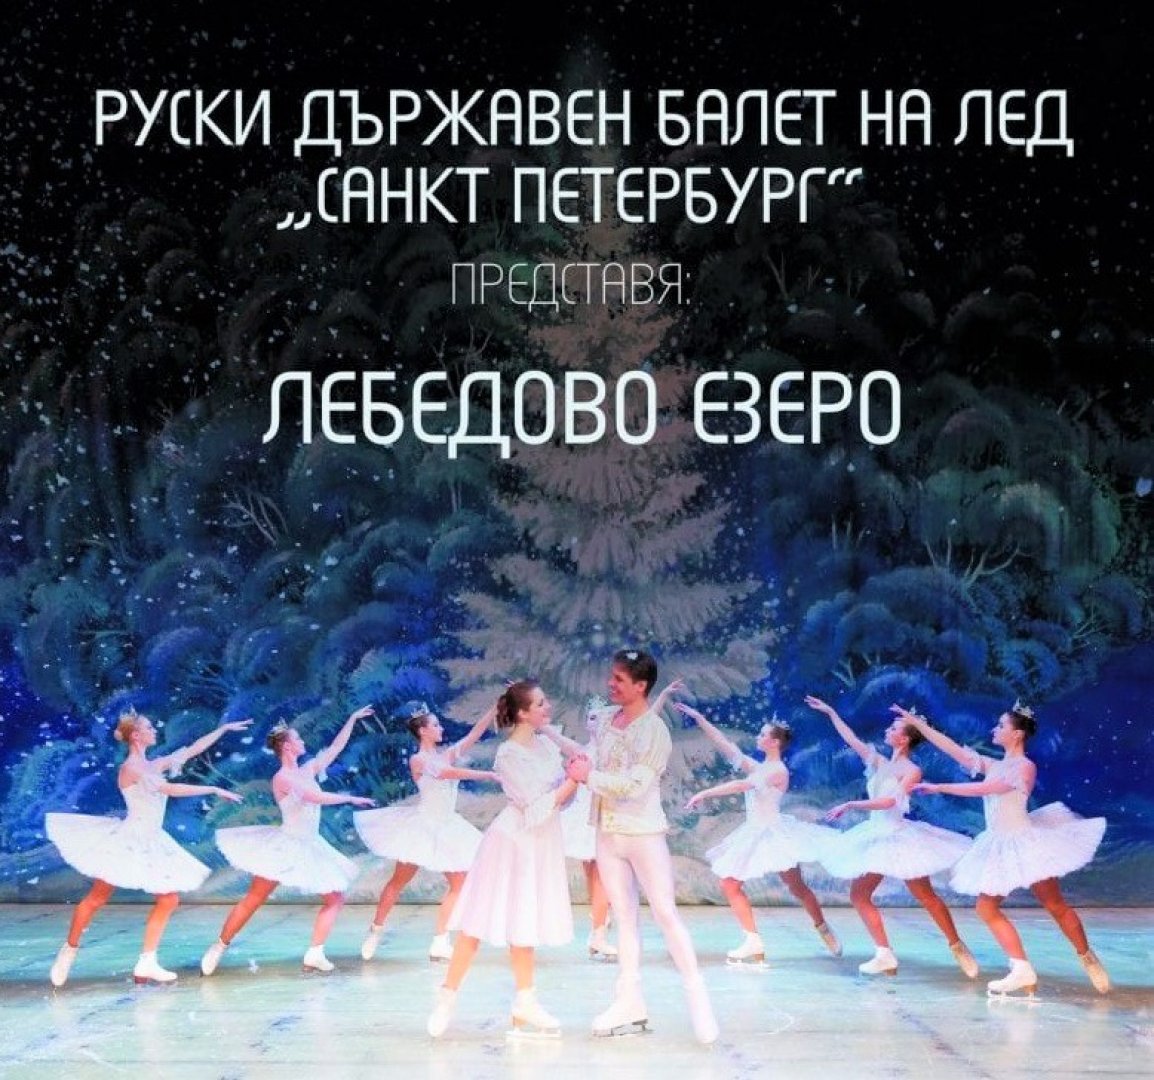  Балетът на лед „Санкт Петербург“ гостува с две представления в Бургас през ноември - E-Burgas.com